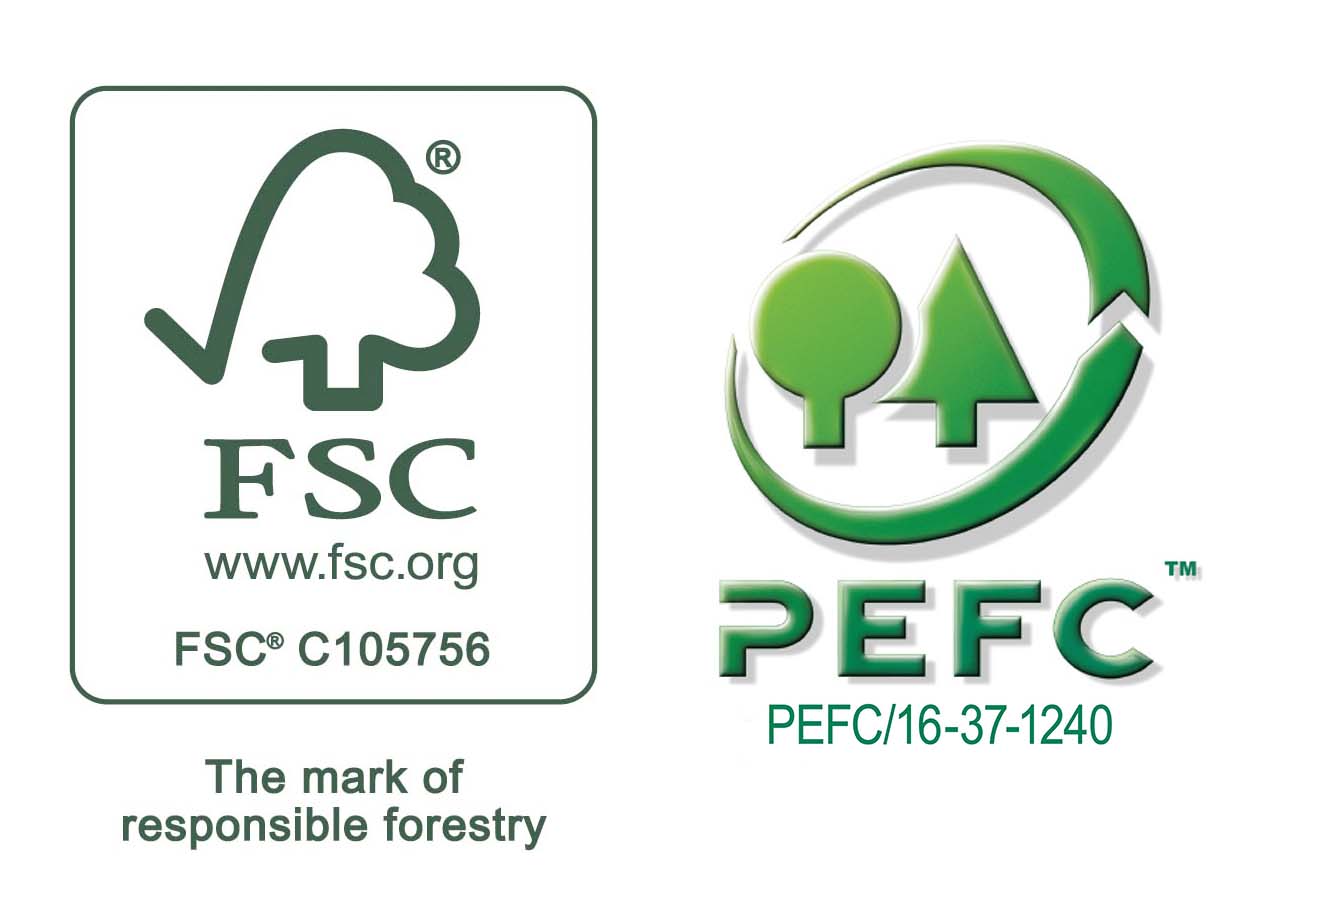 FSC logos